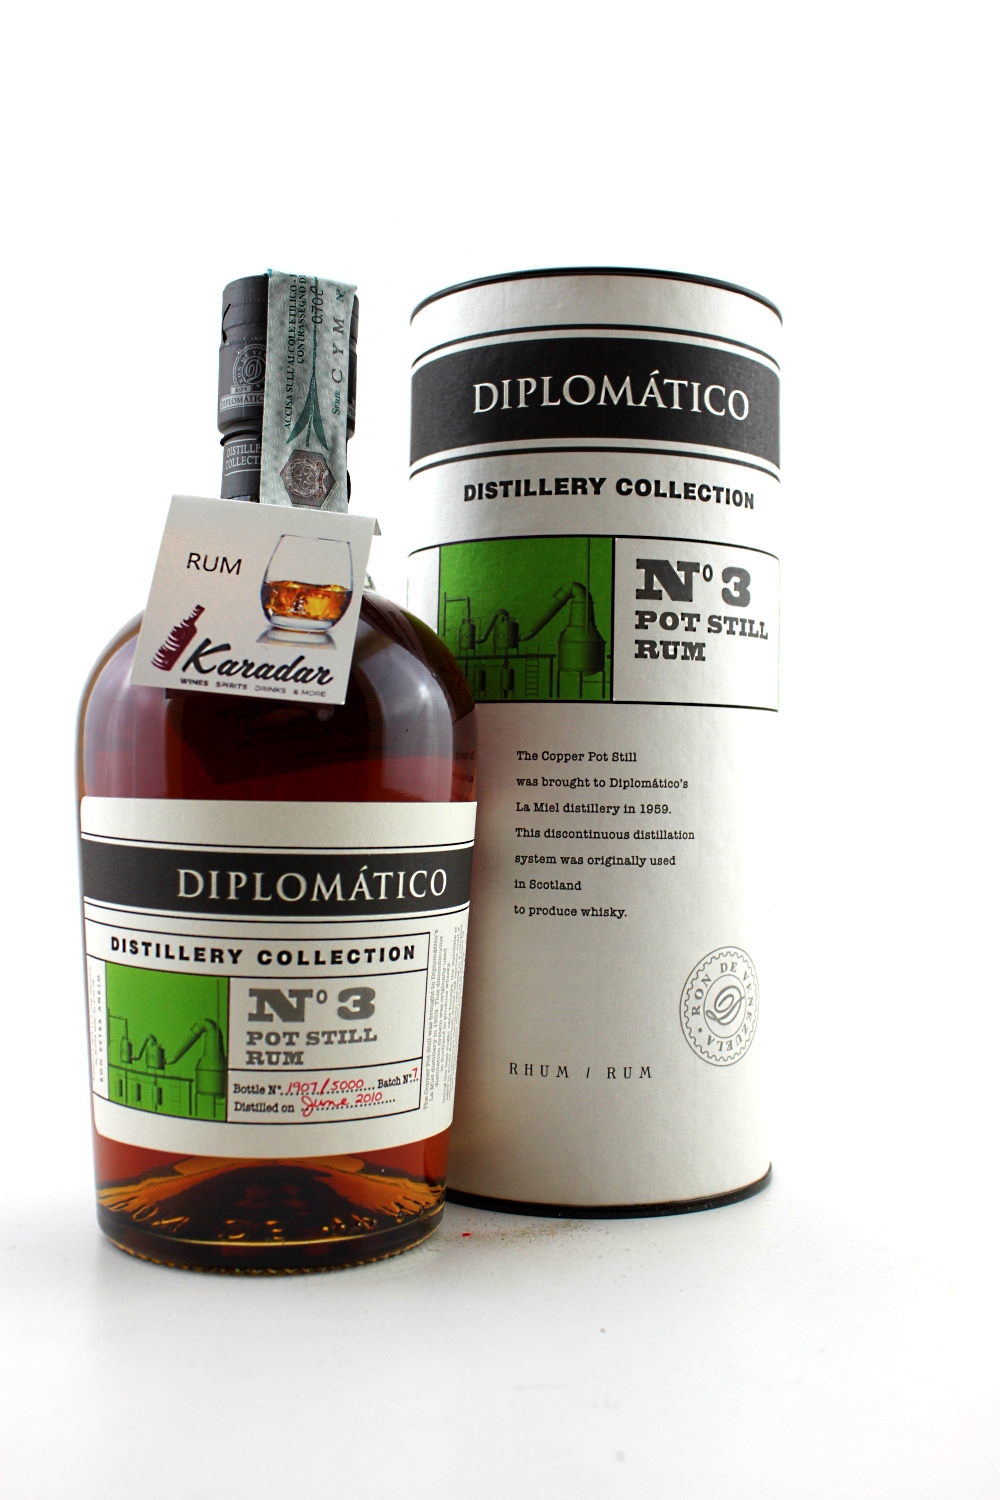 vol. Collection Distillery Diplomatico Still Pot Rum N.3 47% Rum